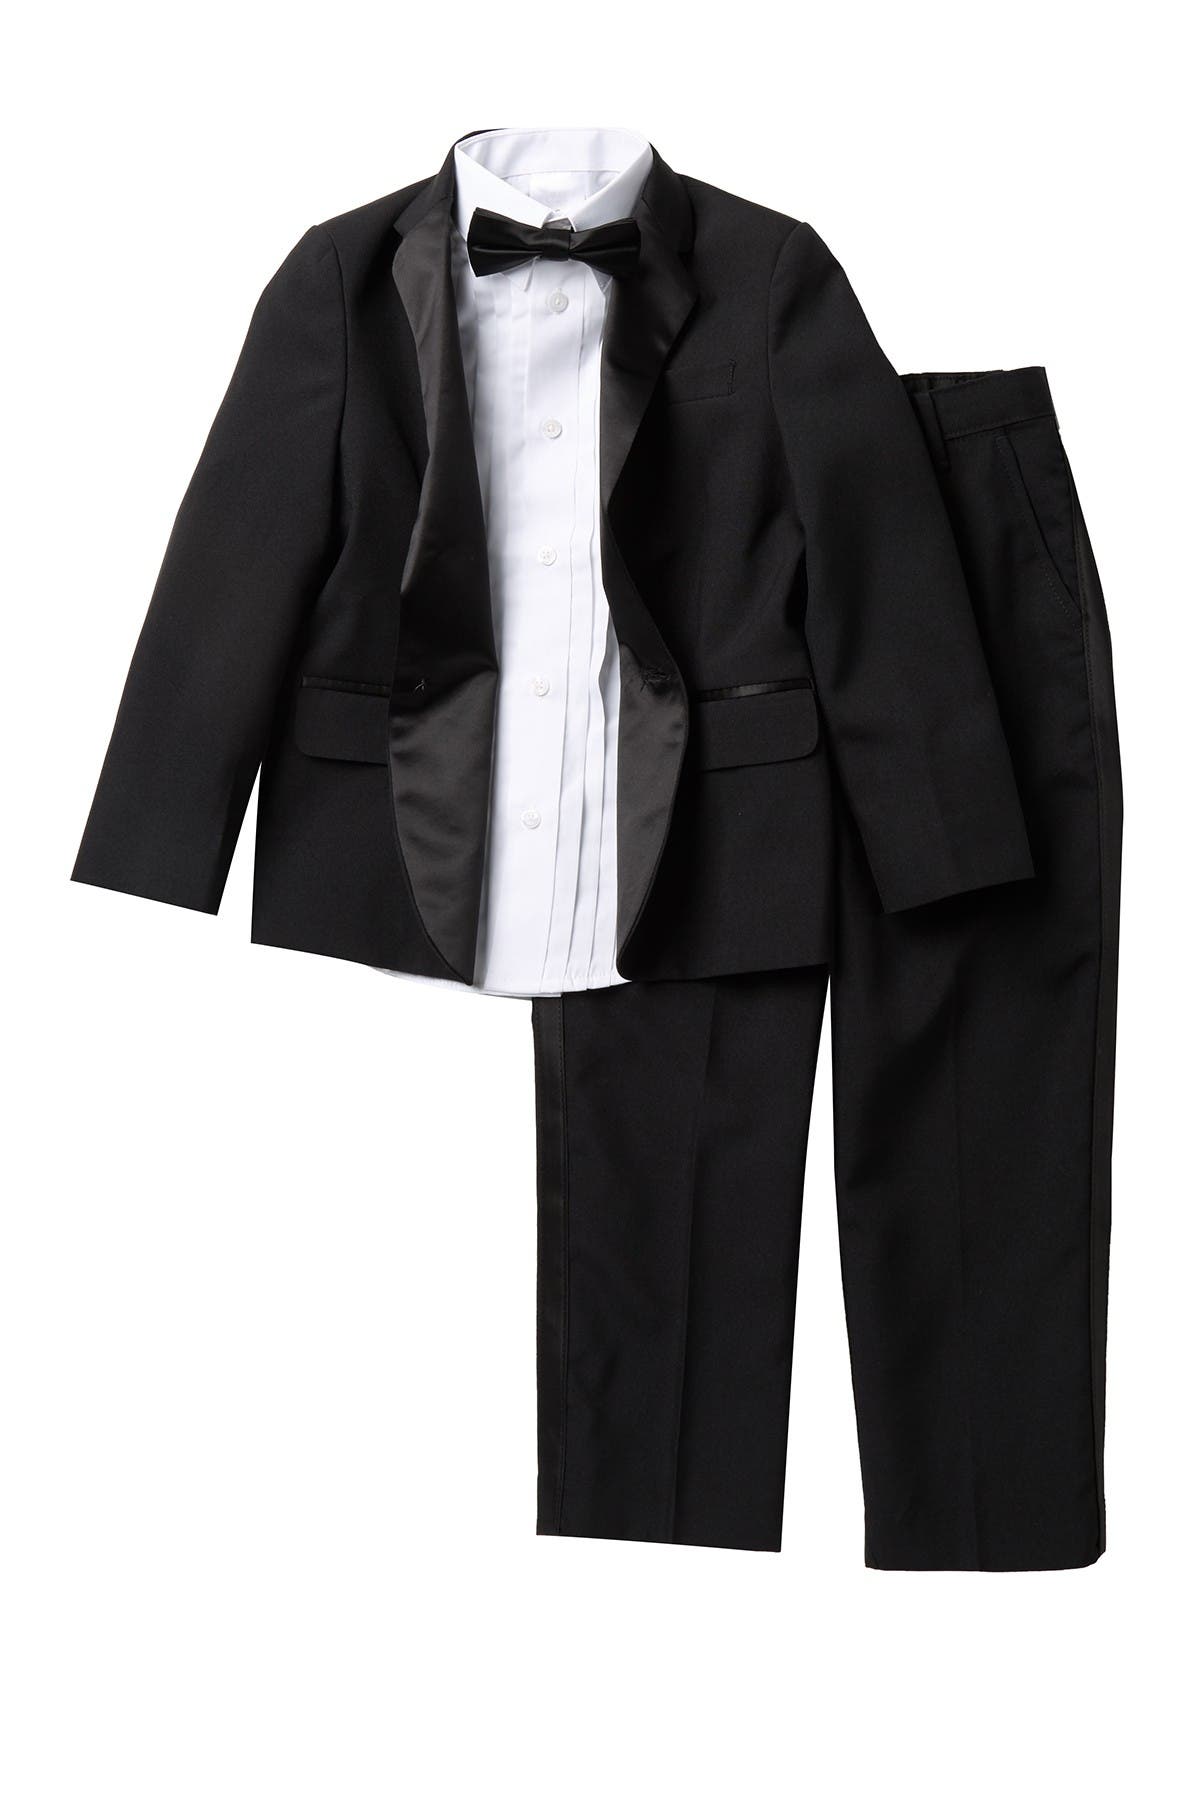 KIDS FASHION Suits & Sets Casual discount 68% White 4Y Gocco Set 